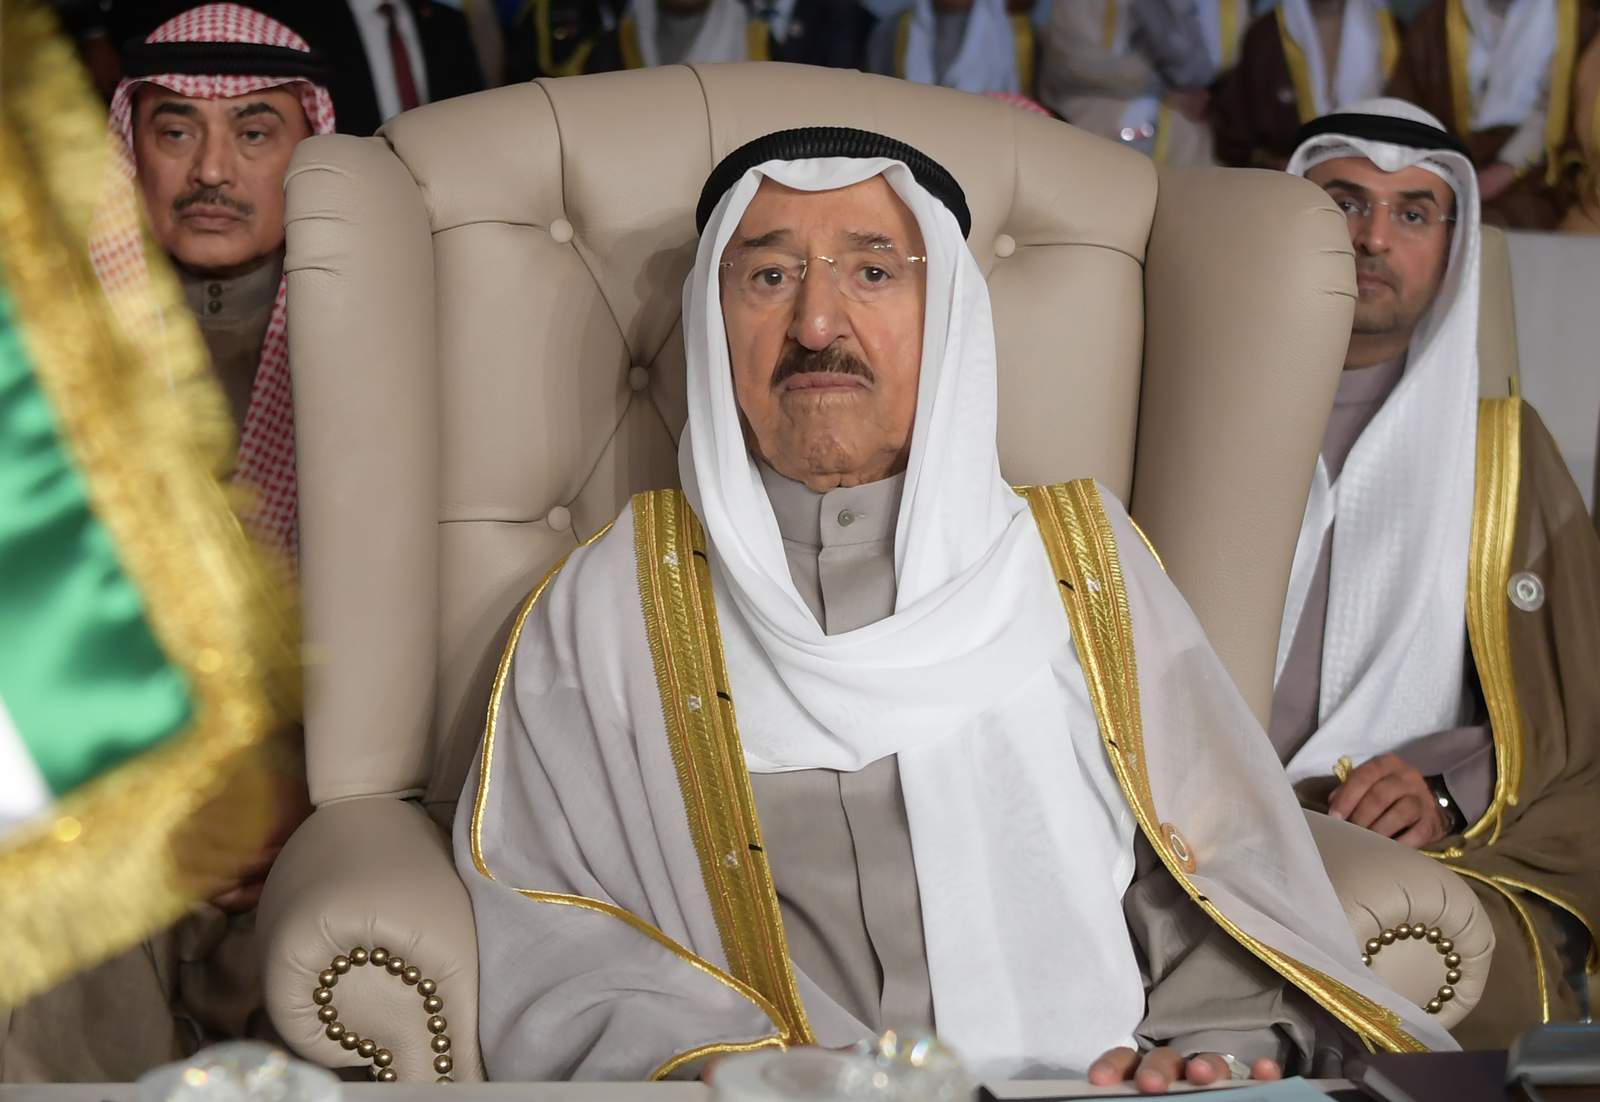 Trump gives award to Kuwait's ruling emir